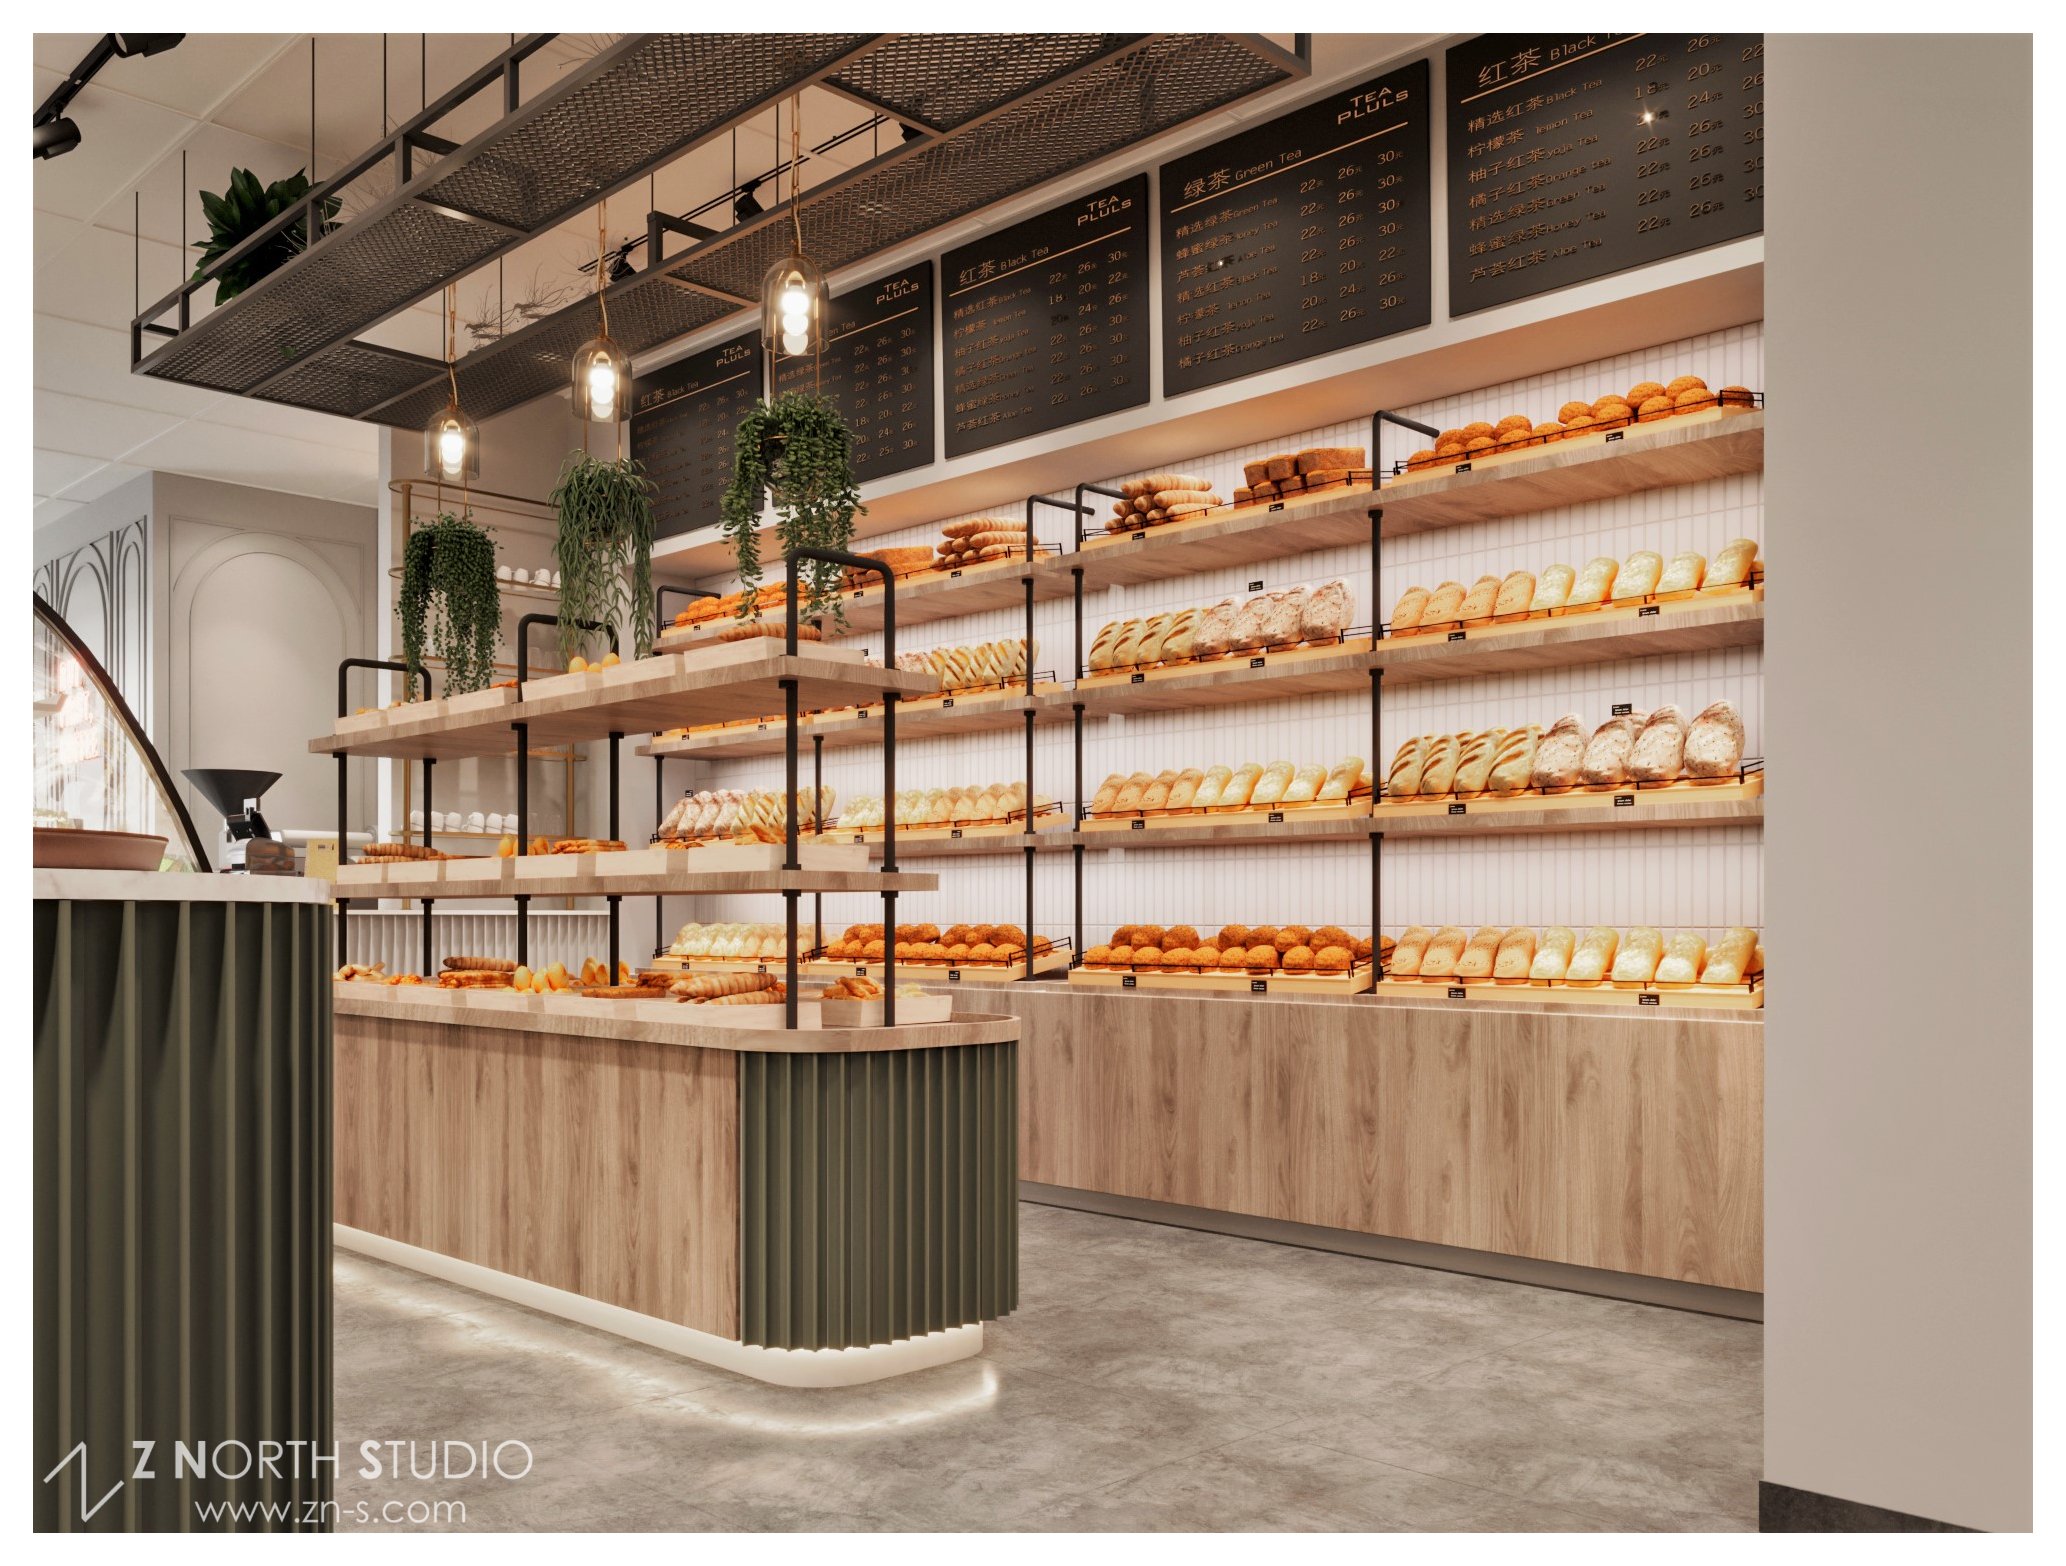 shilla bakery usa interior design z north Studio dc (5).jpg